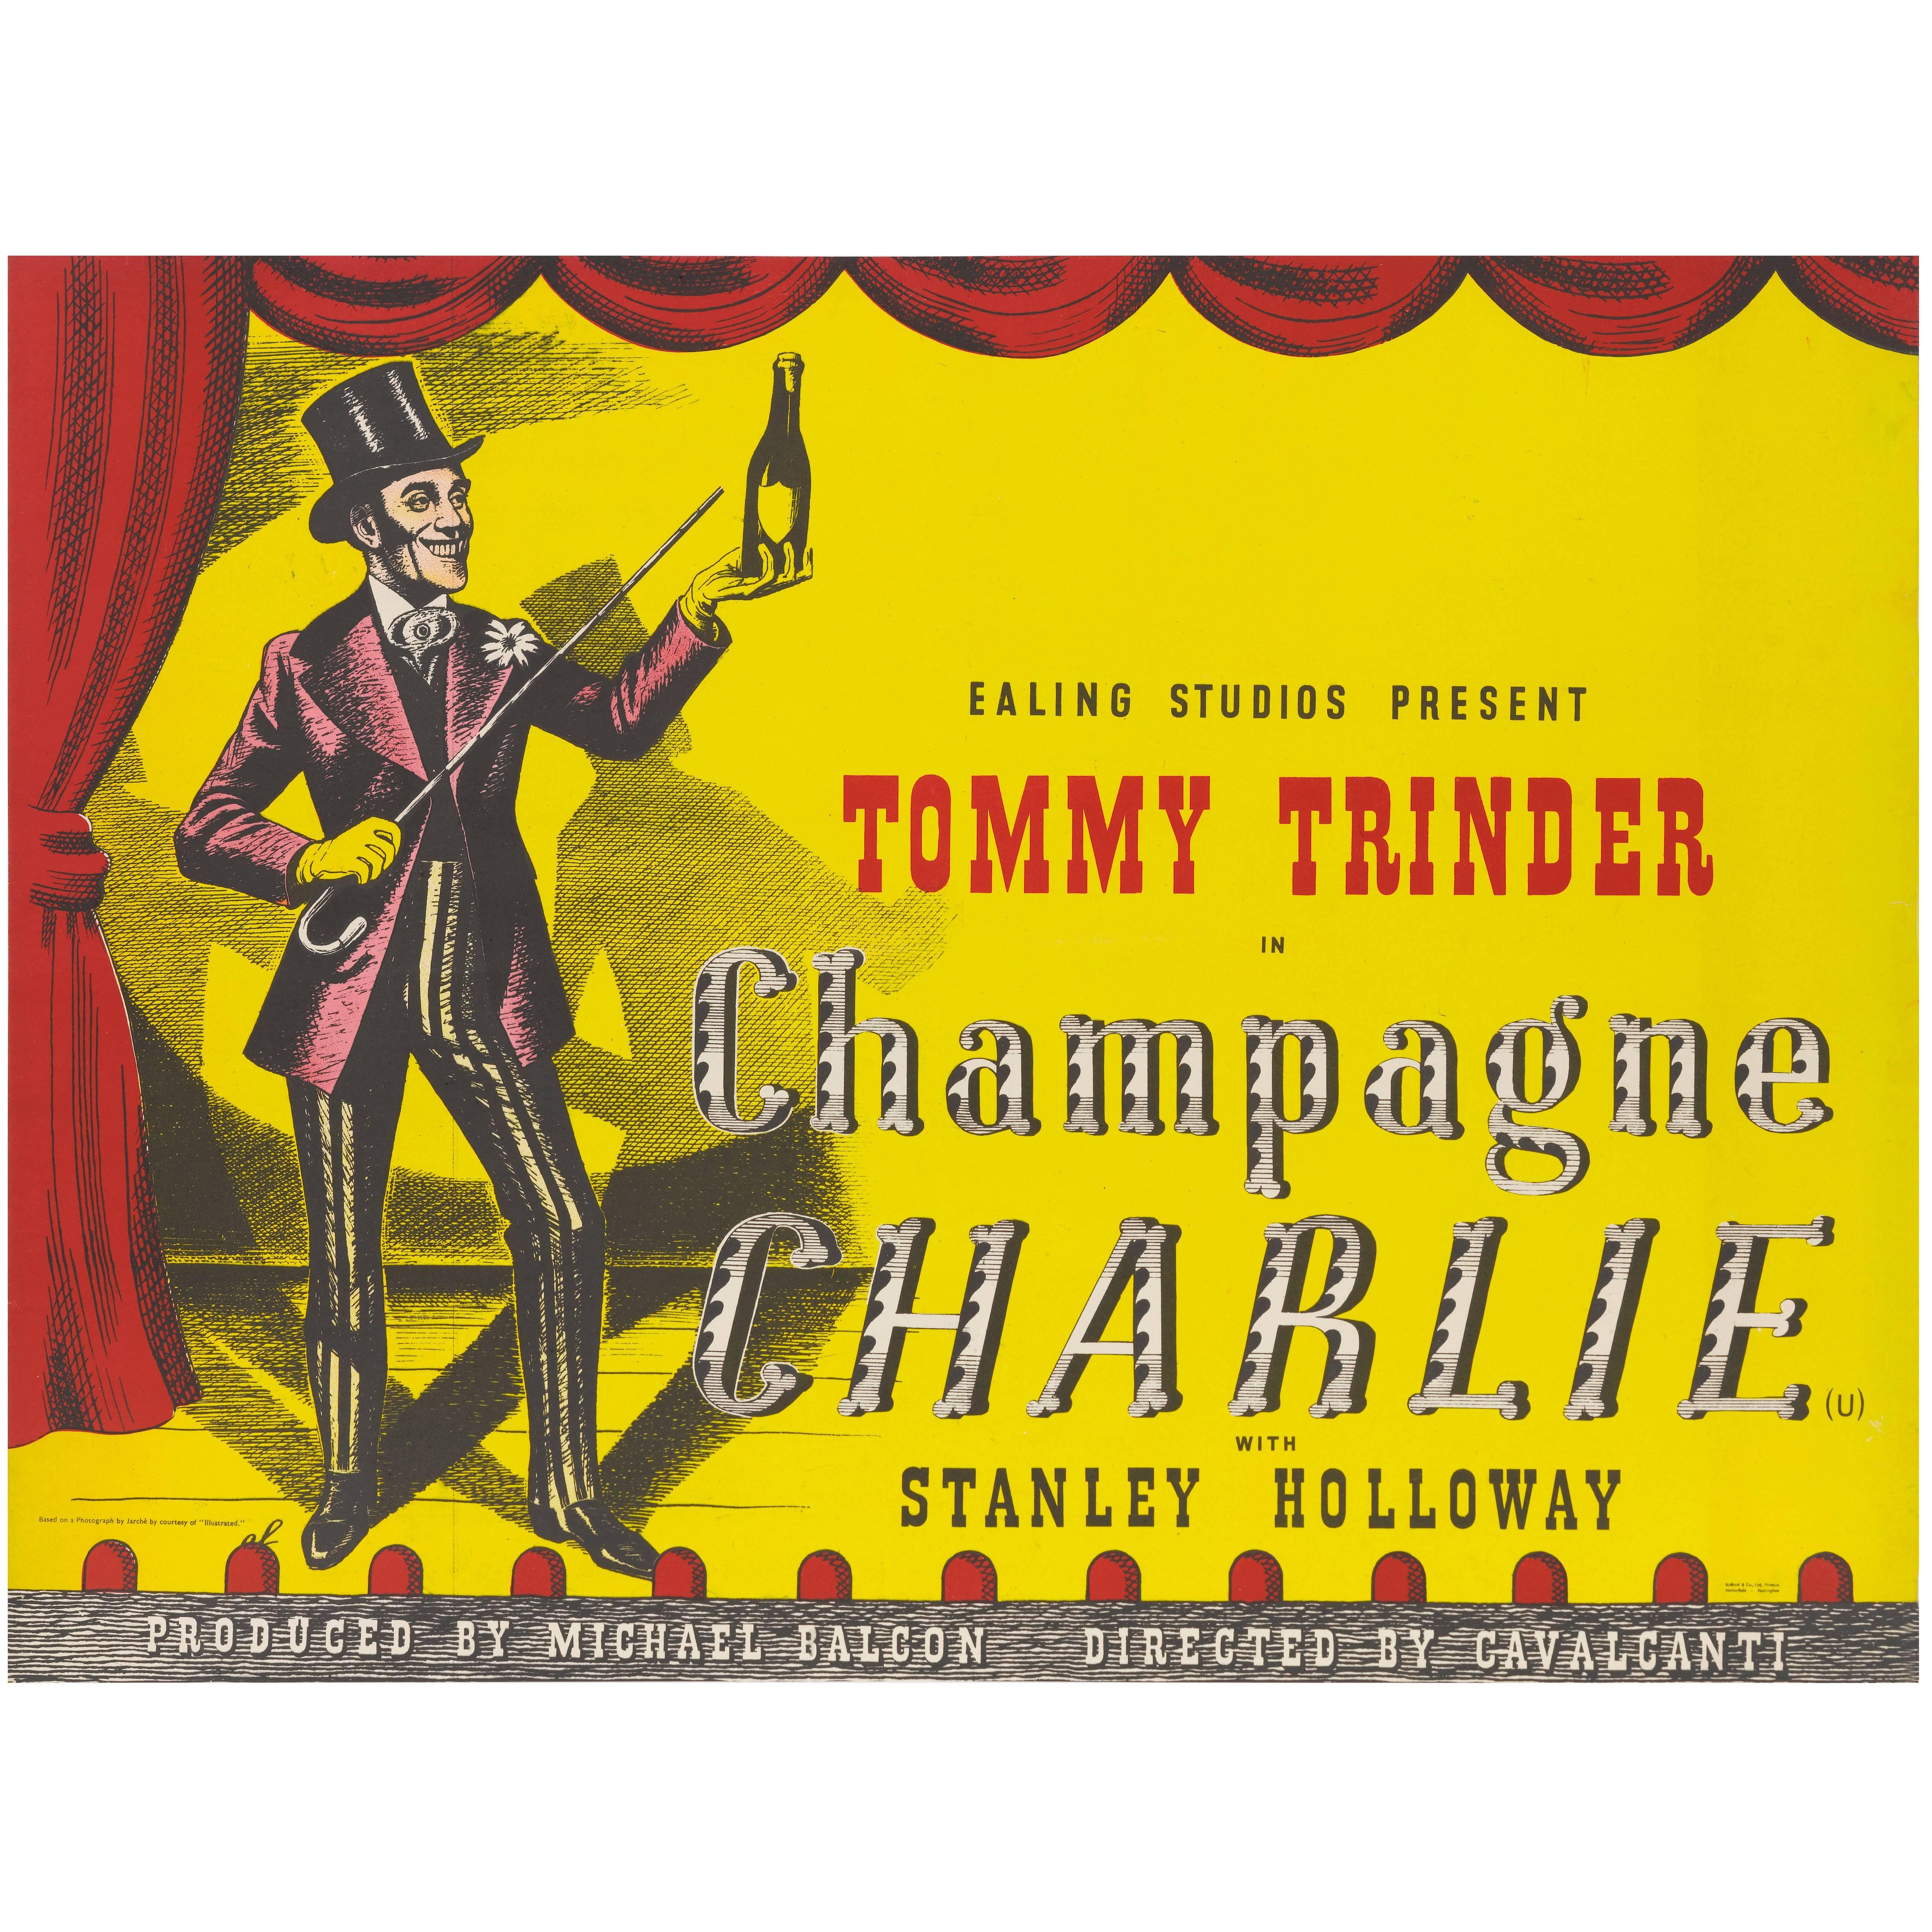 "Champagne Charlie" Original British Movie Poster